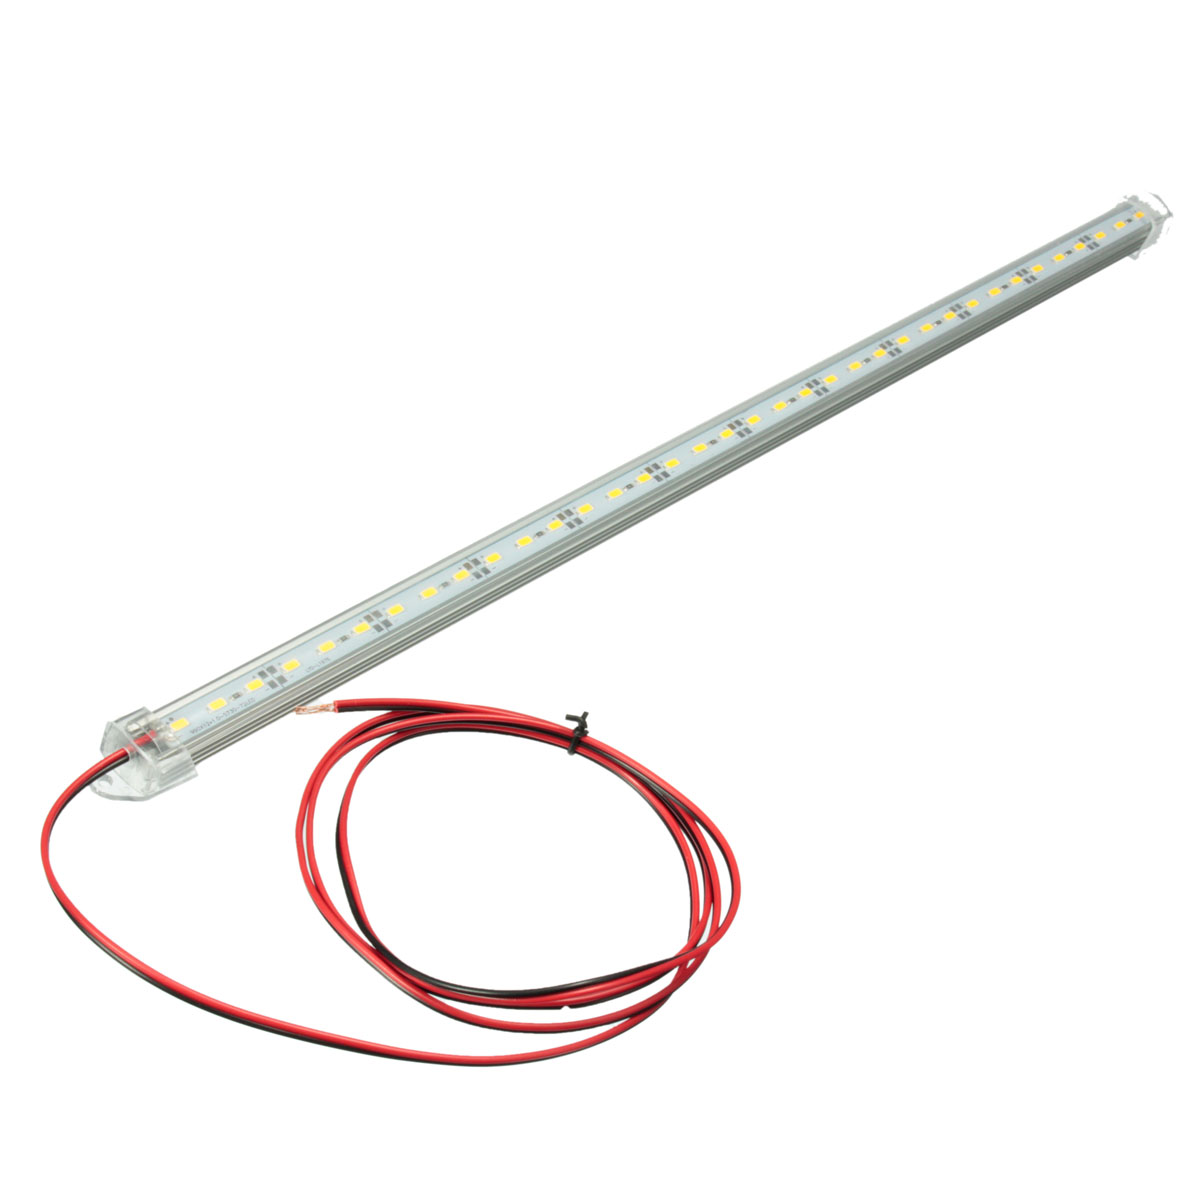 12V 50cm LED Strip Light Bar 5630 SMD Interior Lamp For Car Van Caravan Boat LWB Rear Lights